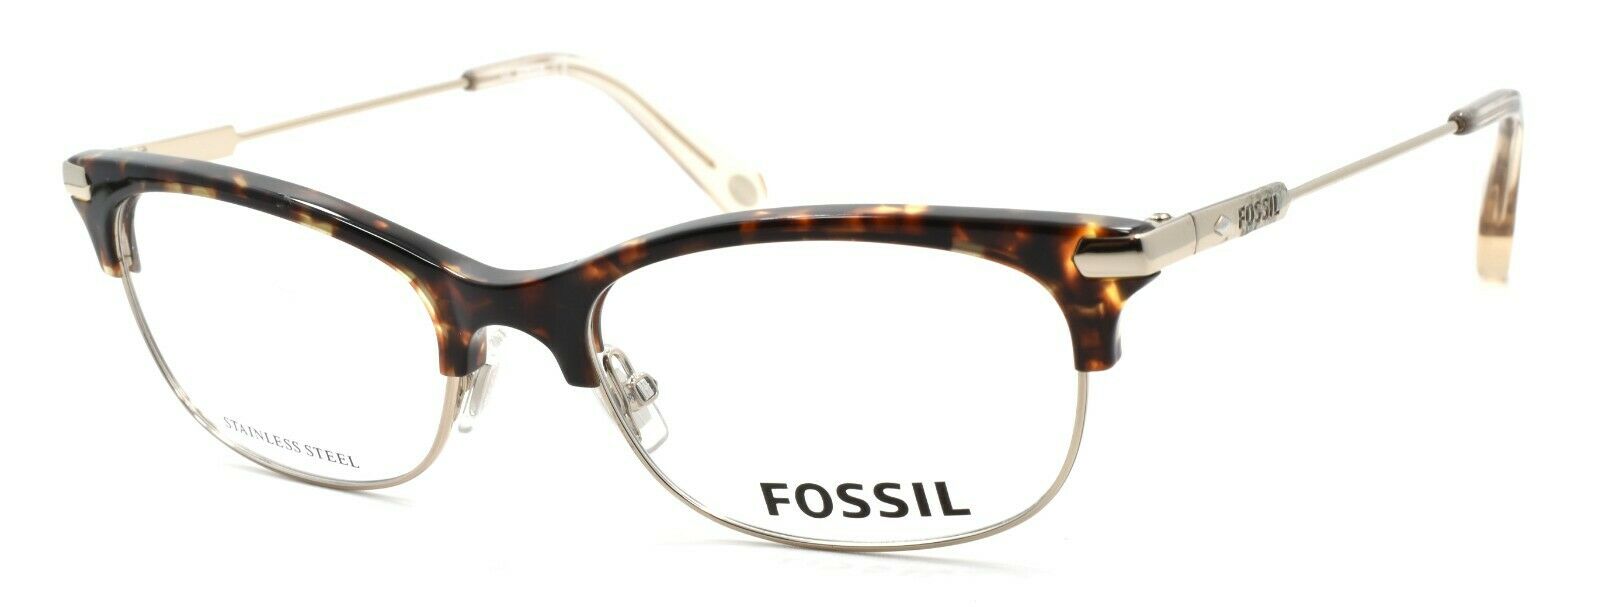 1-Fossil FOS 6055 OIM Women's Eyeglasses Frames 50-17-145 Gold / Havana-762753440174-IKSpecs